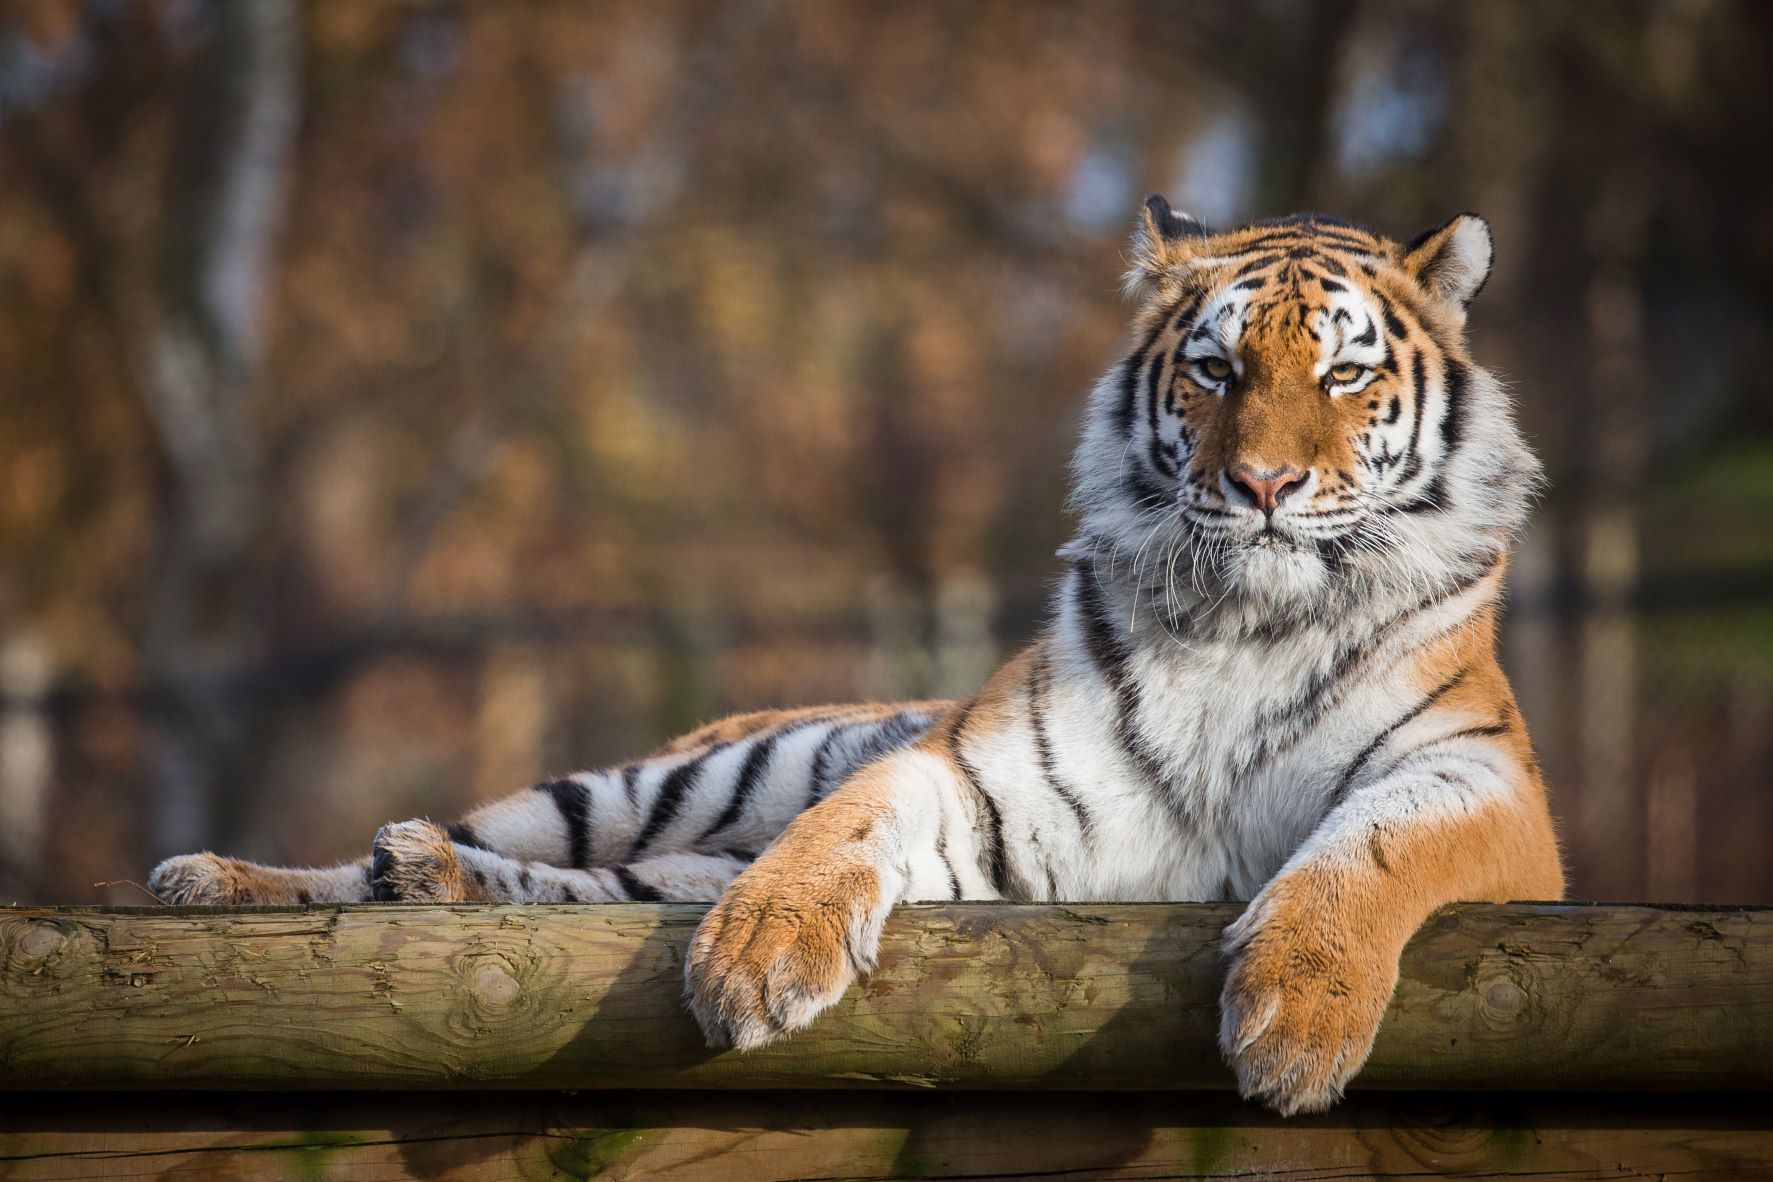 Tiger cubs explore their enclosure at Norfolk zoo - The Irish News